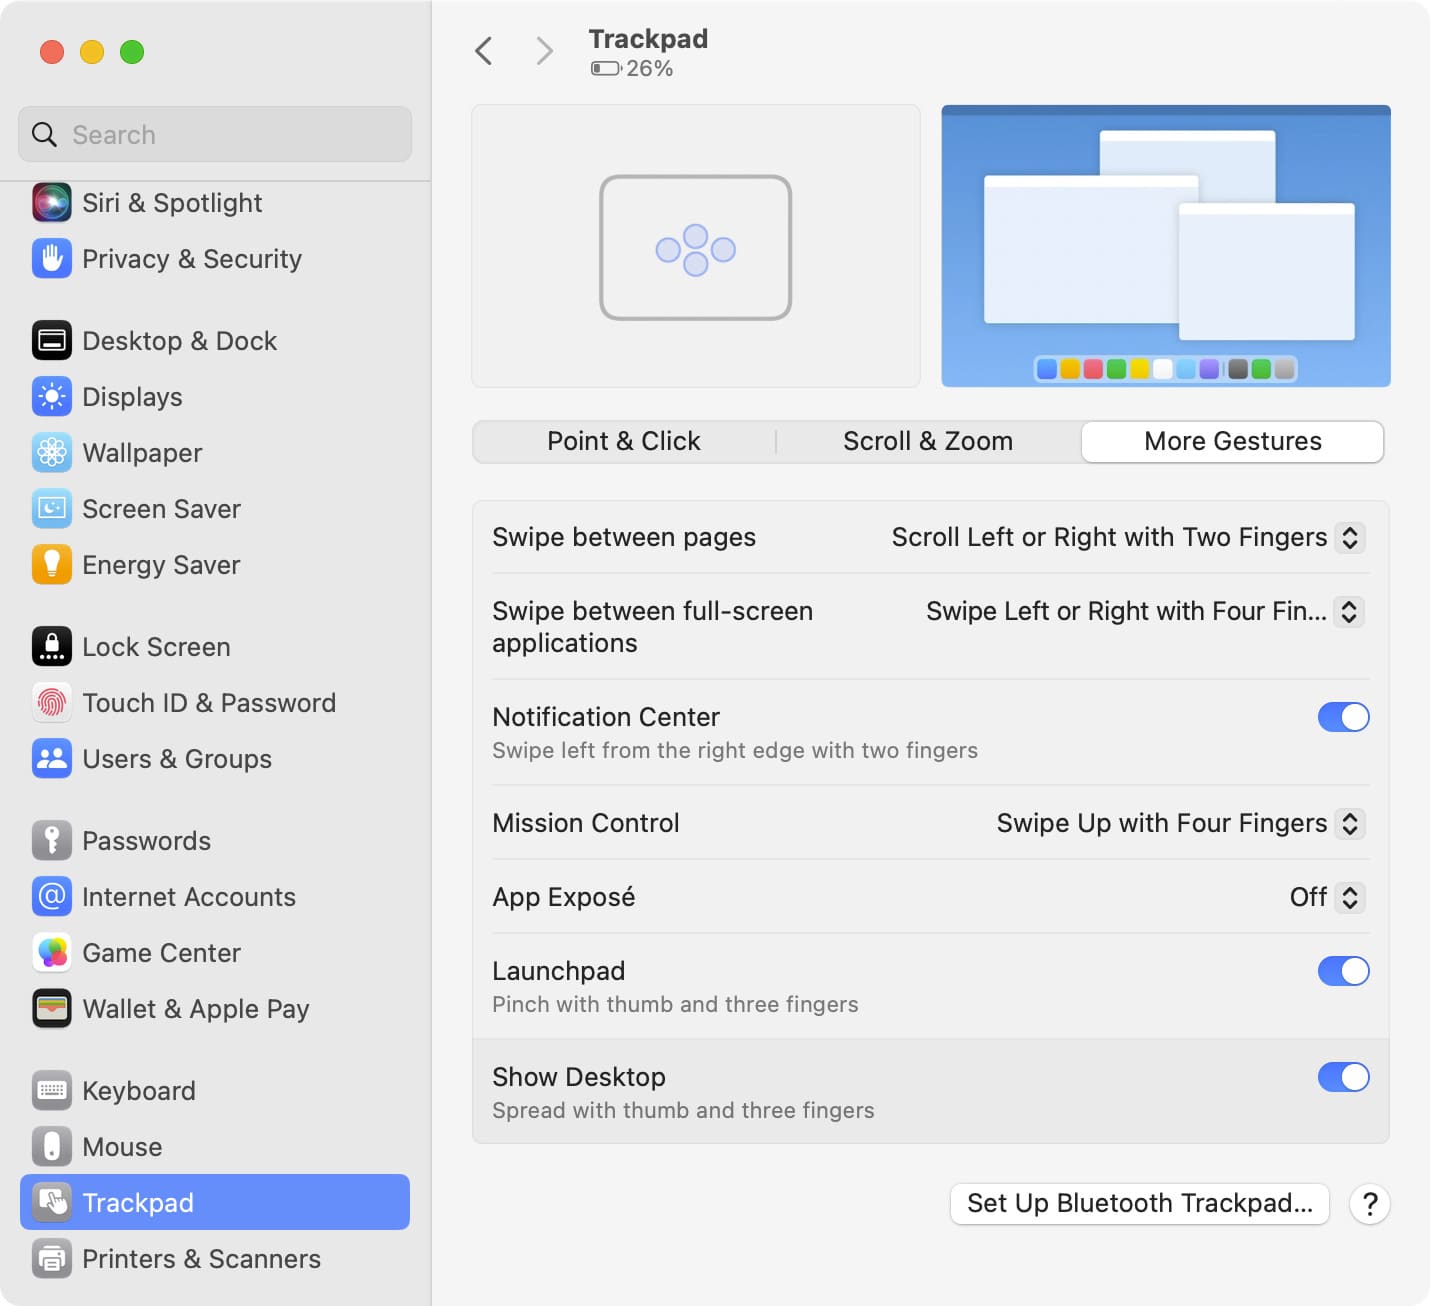 More Gestures in Trackpad settings on Mac